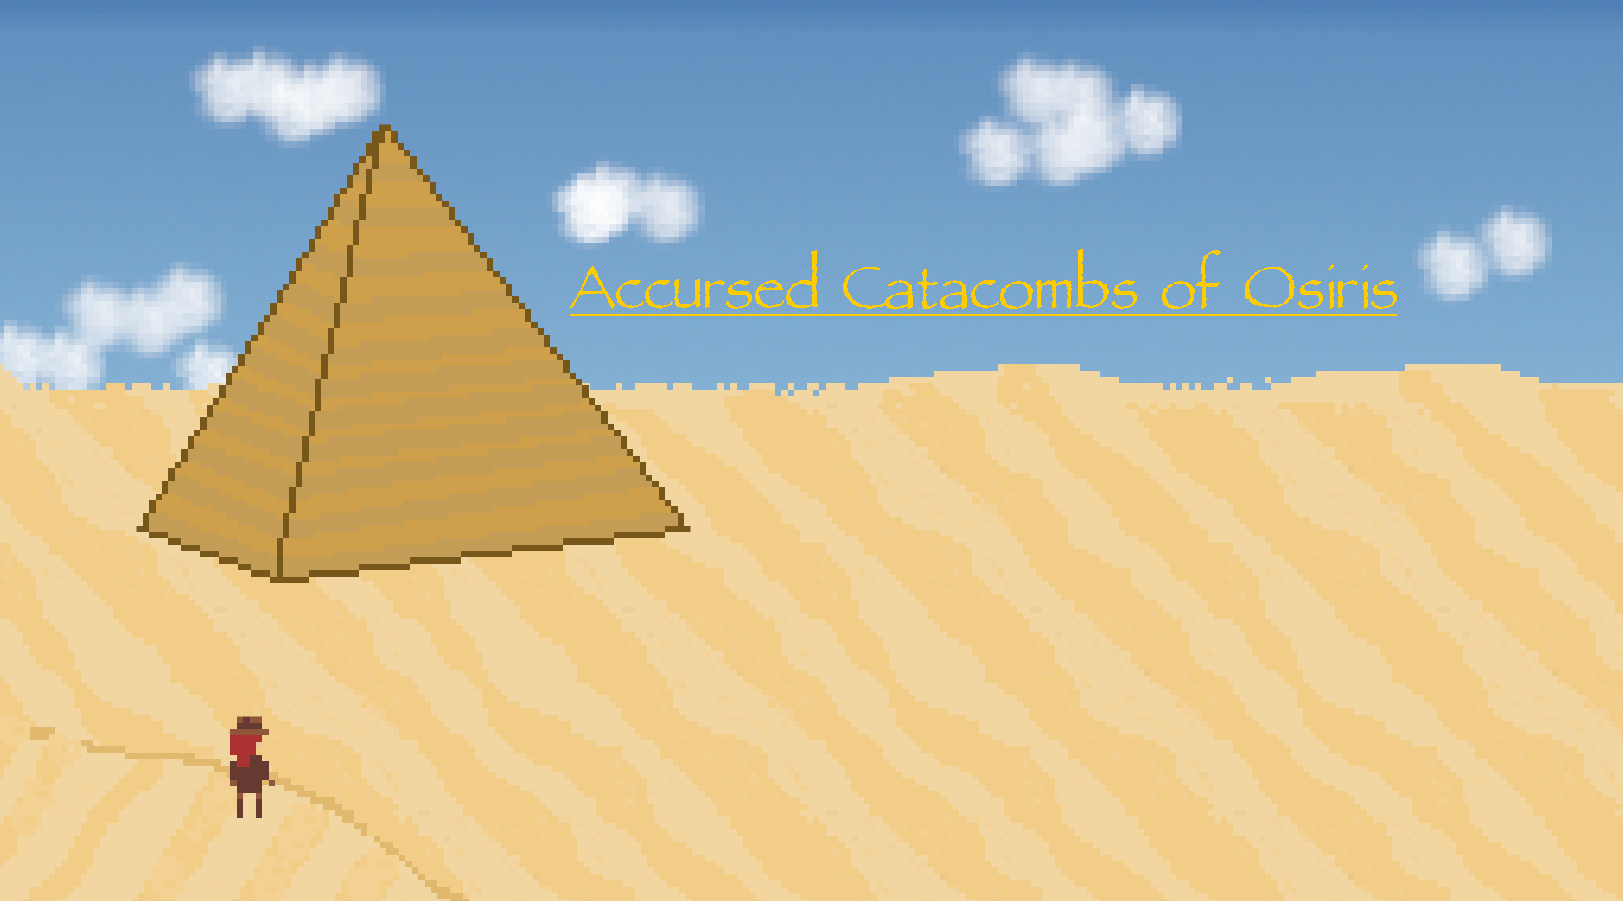 Accursed Catacombs of Osiris